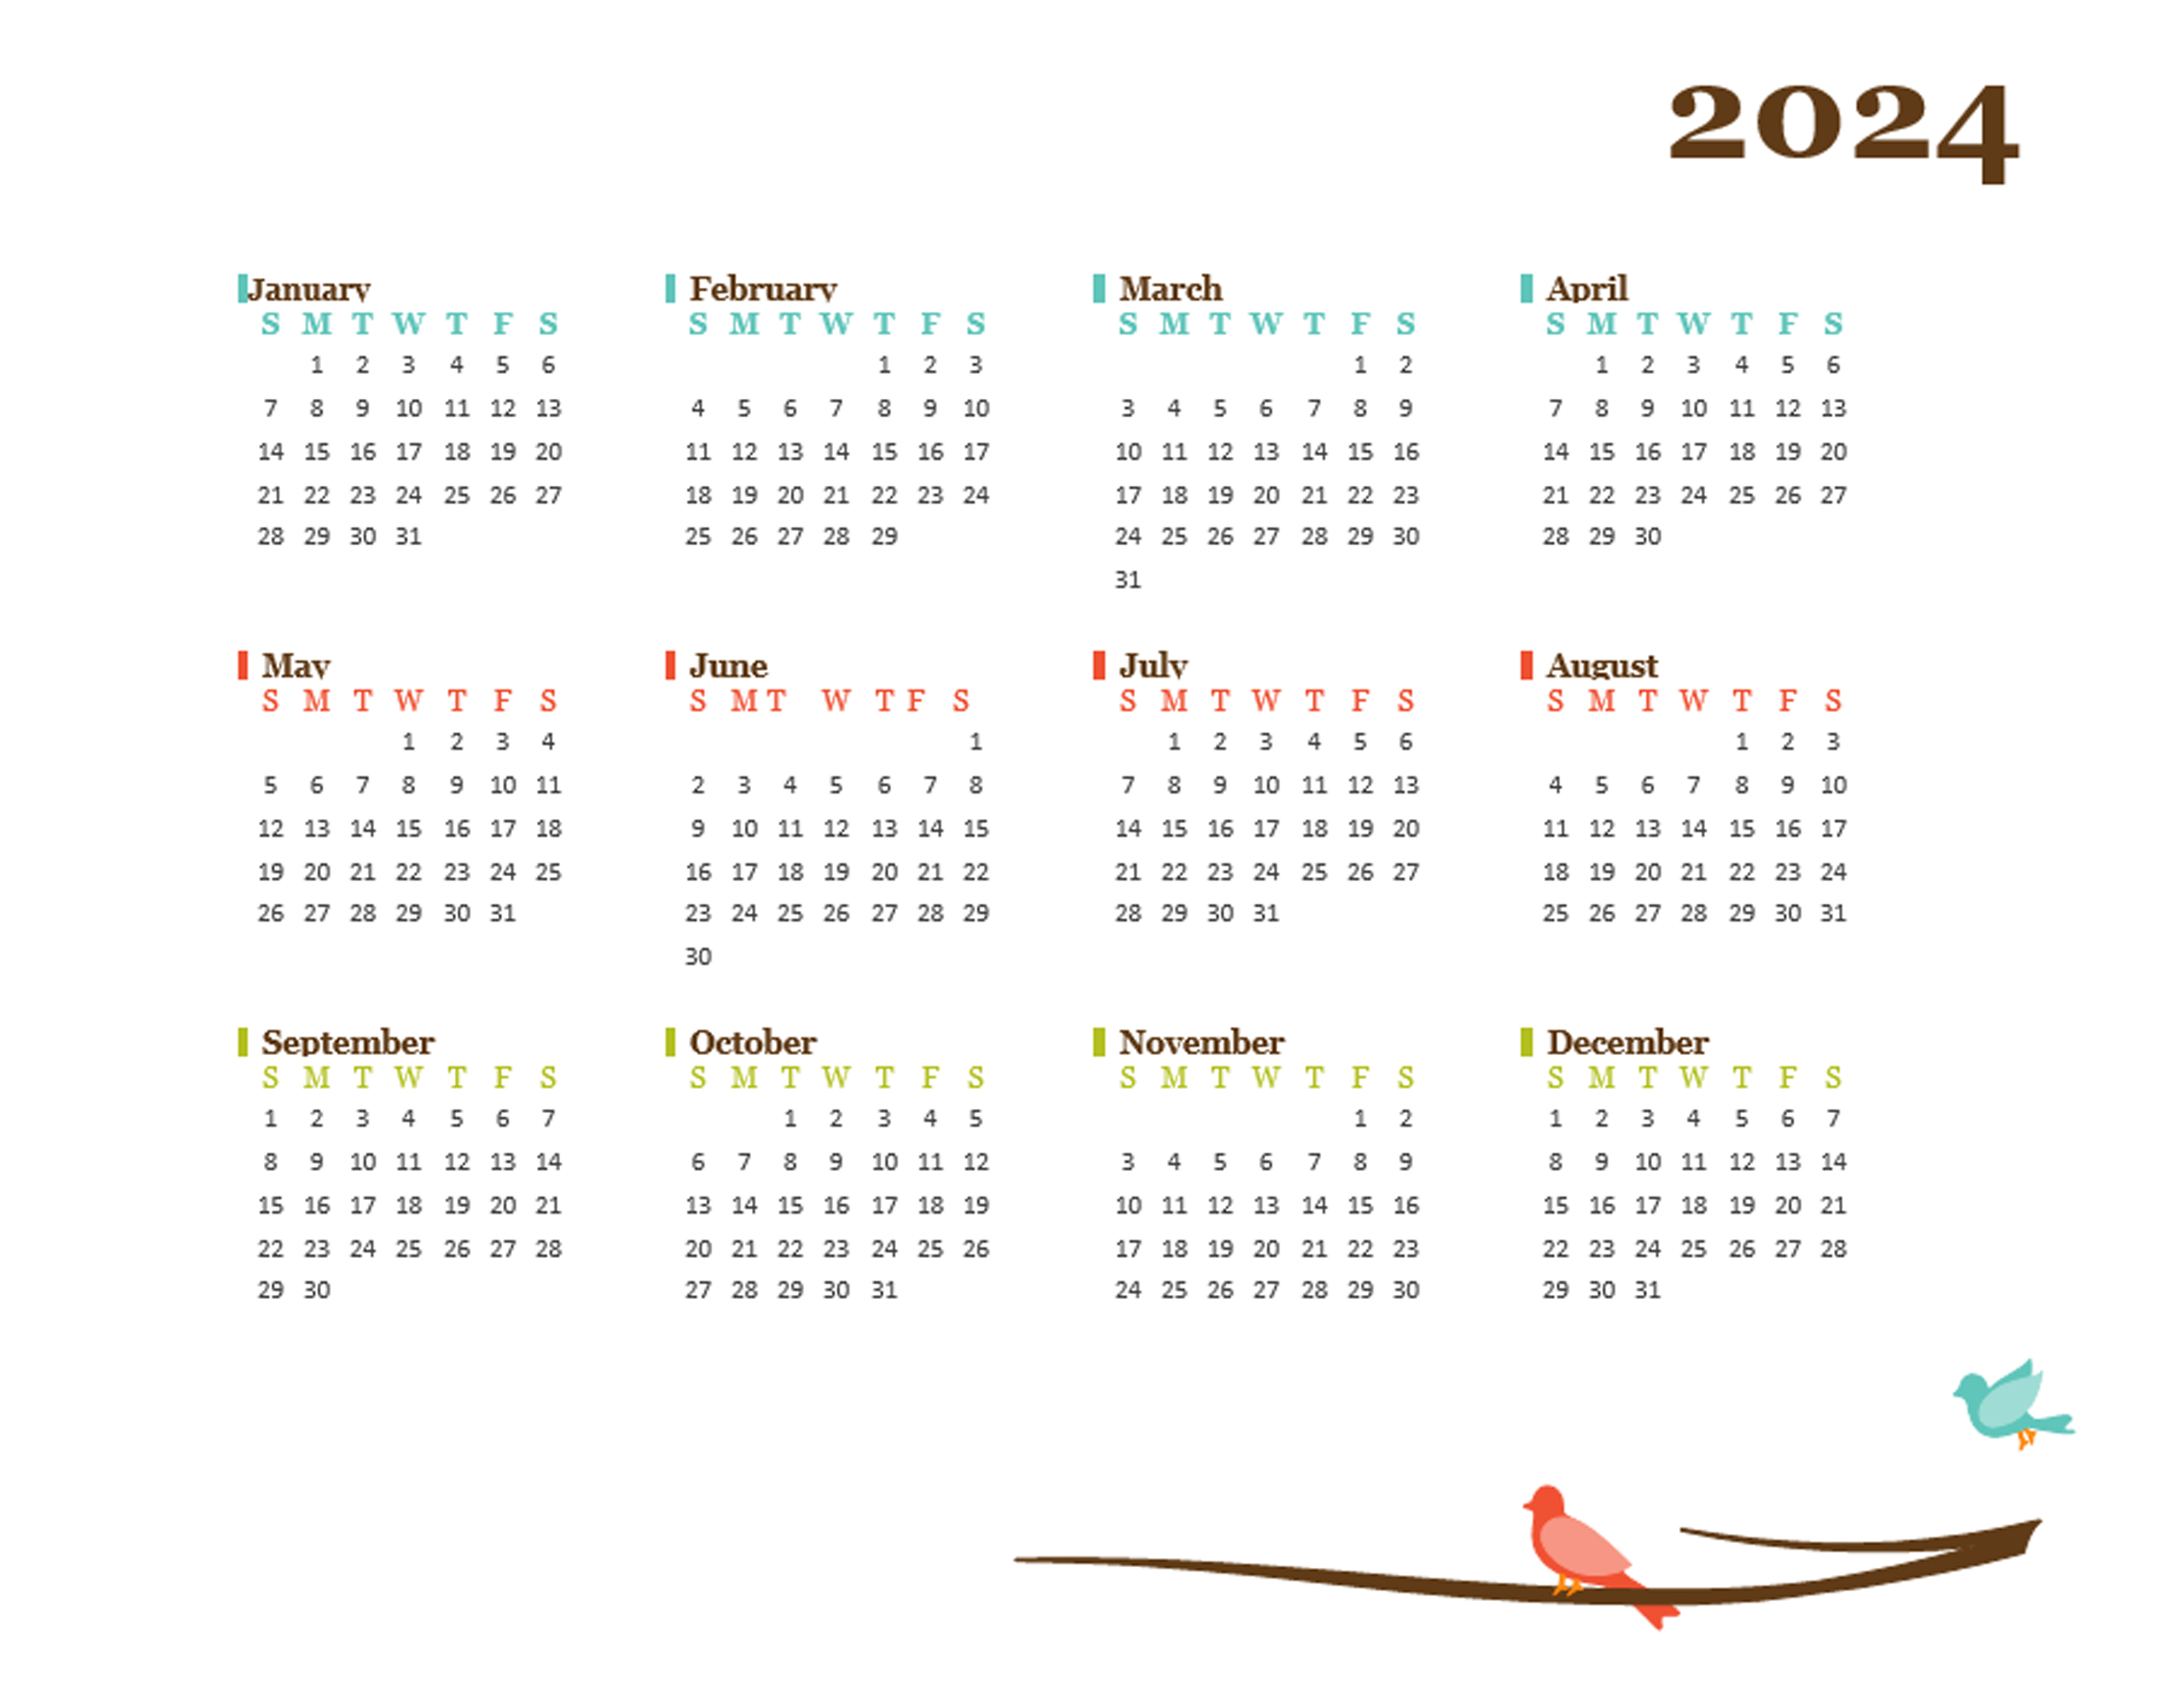 2024 Australian Calendar